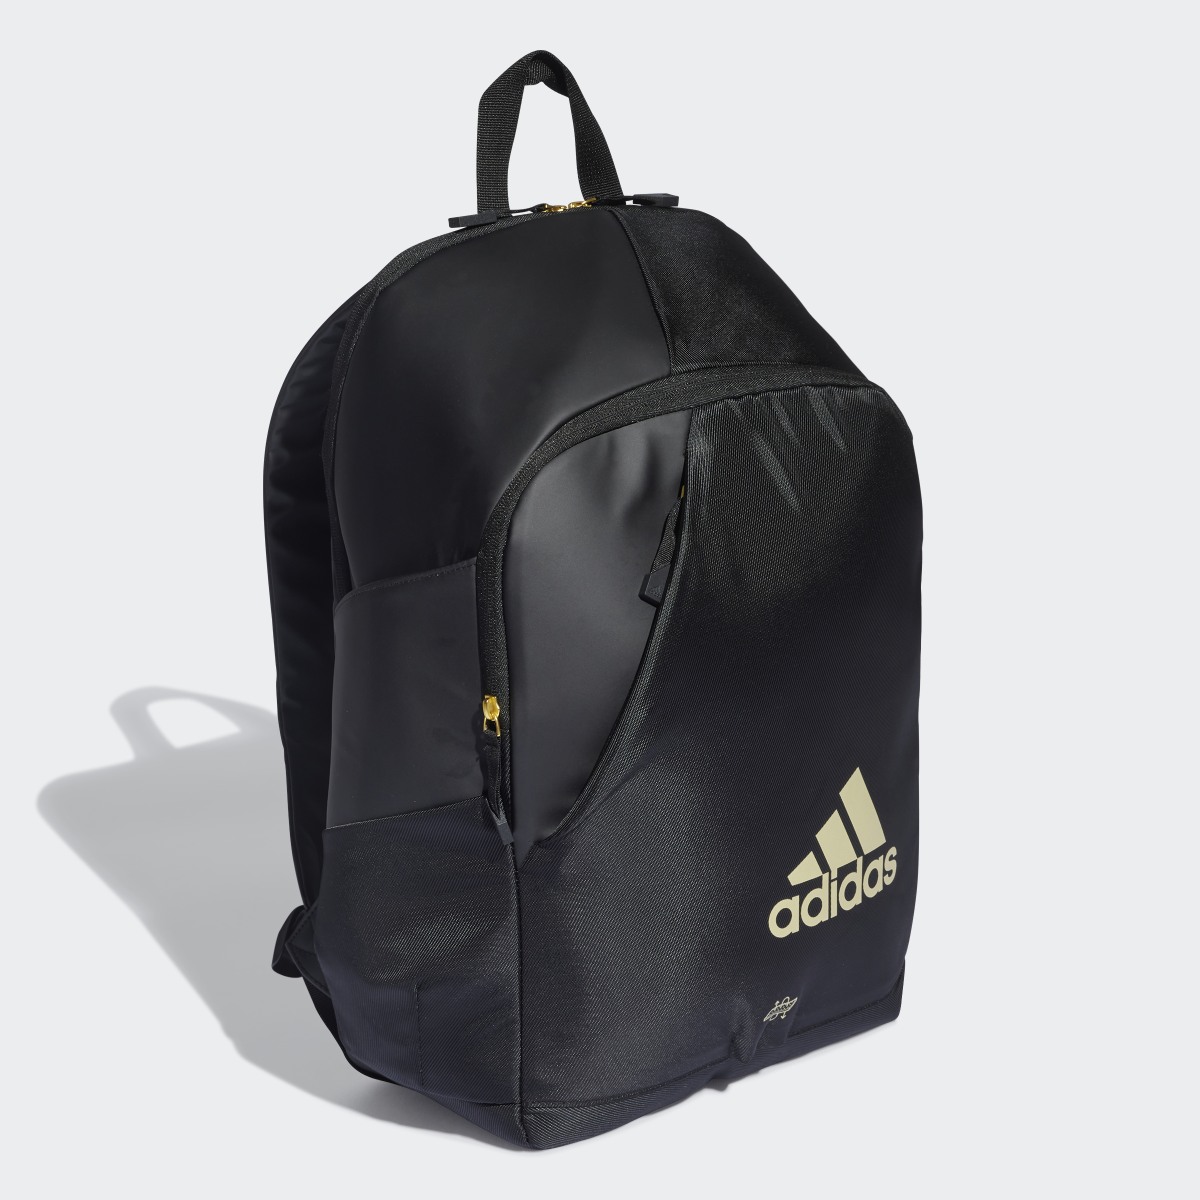 Adidas VS.6 Black/Gold Rucksack. 4